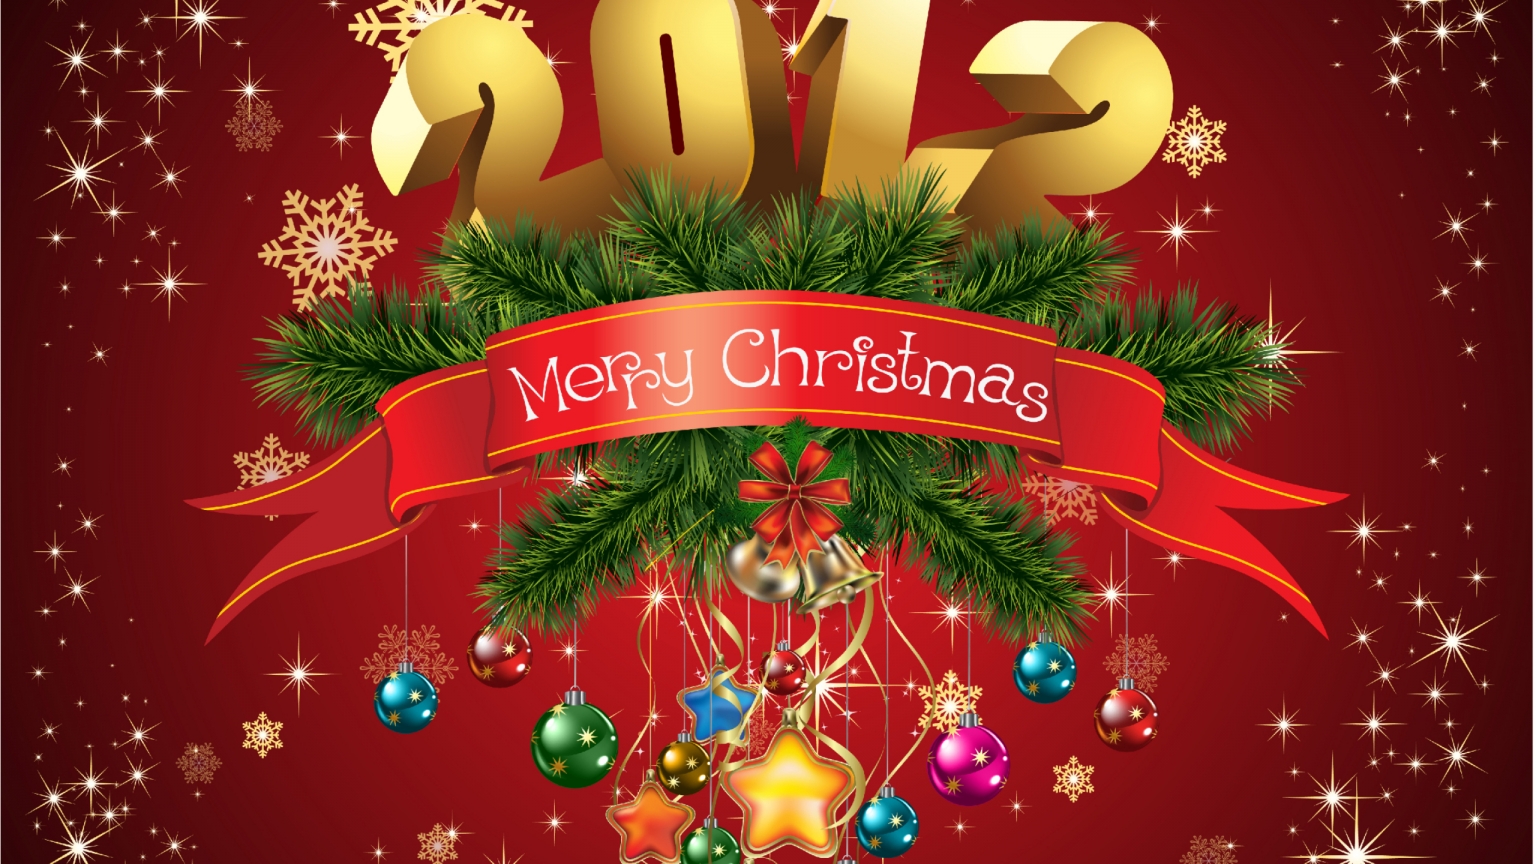 Merry Christmas 2012 for 1536 x 864 HDTV resolution